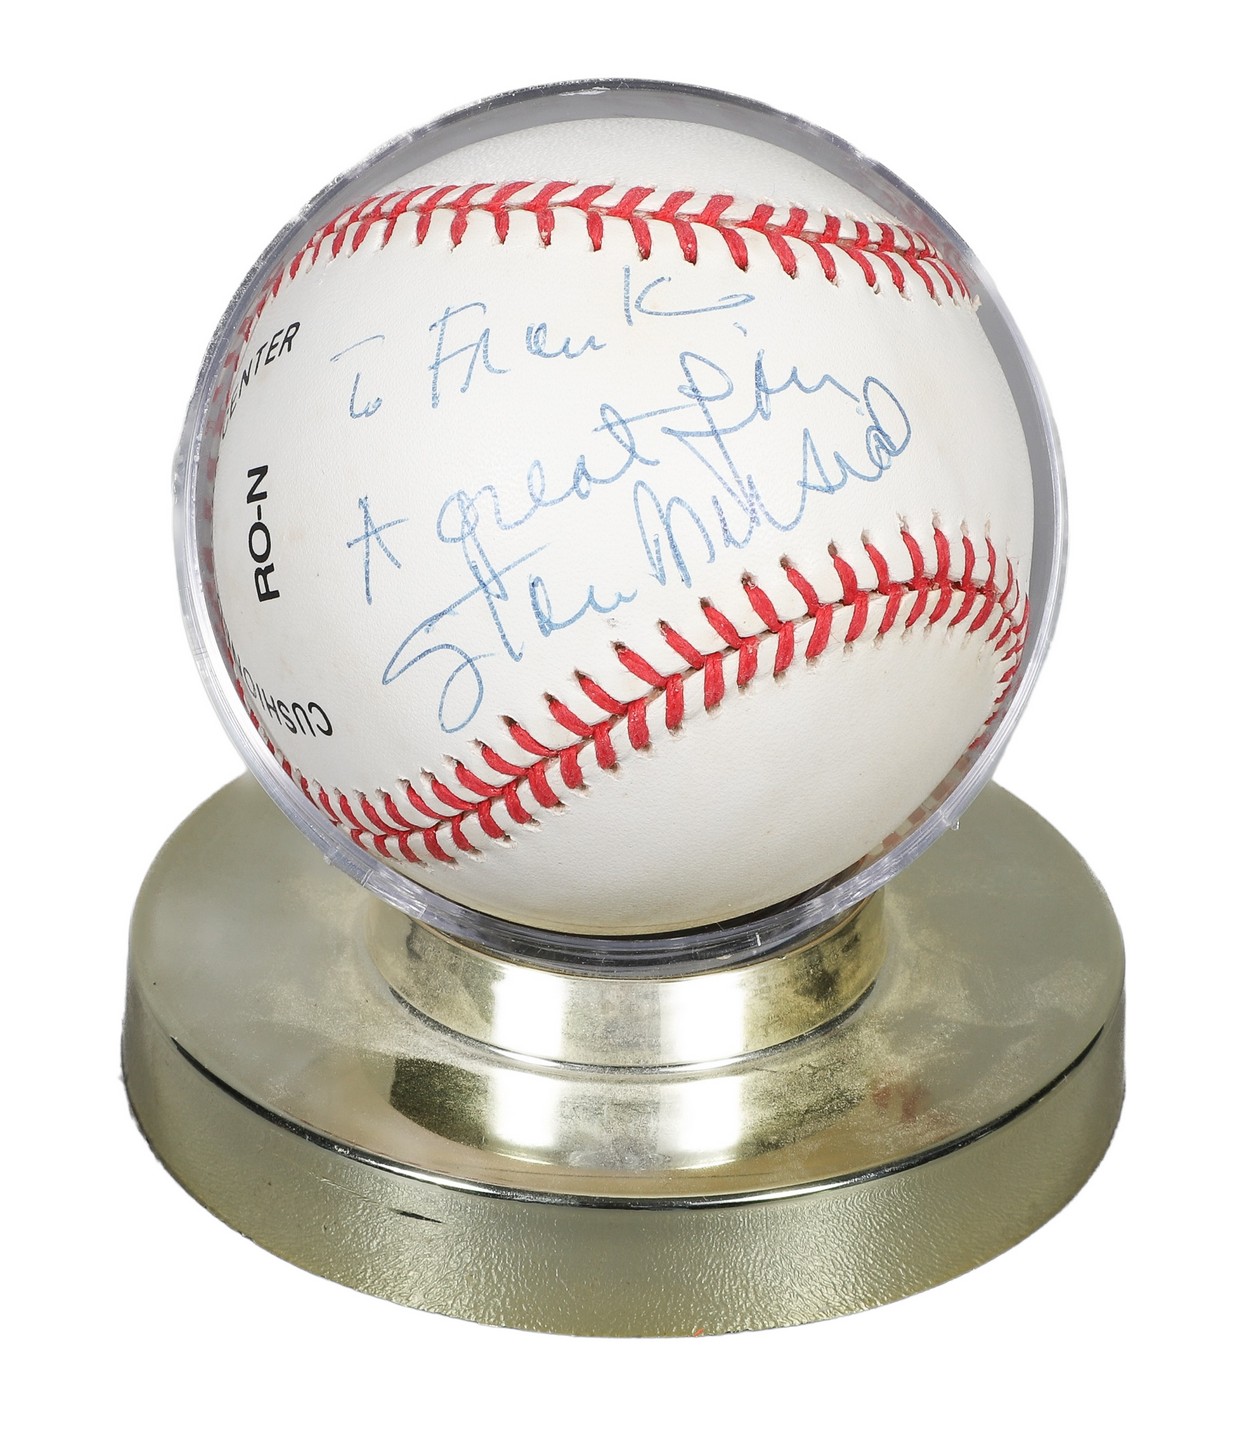 Stan Musial Signed Baseball official 2e065d